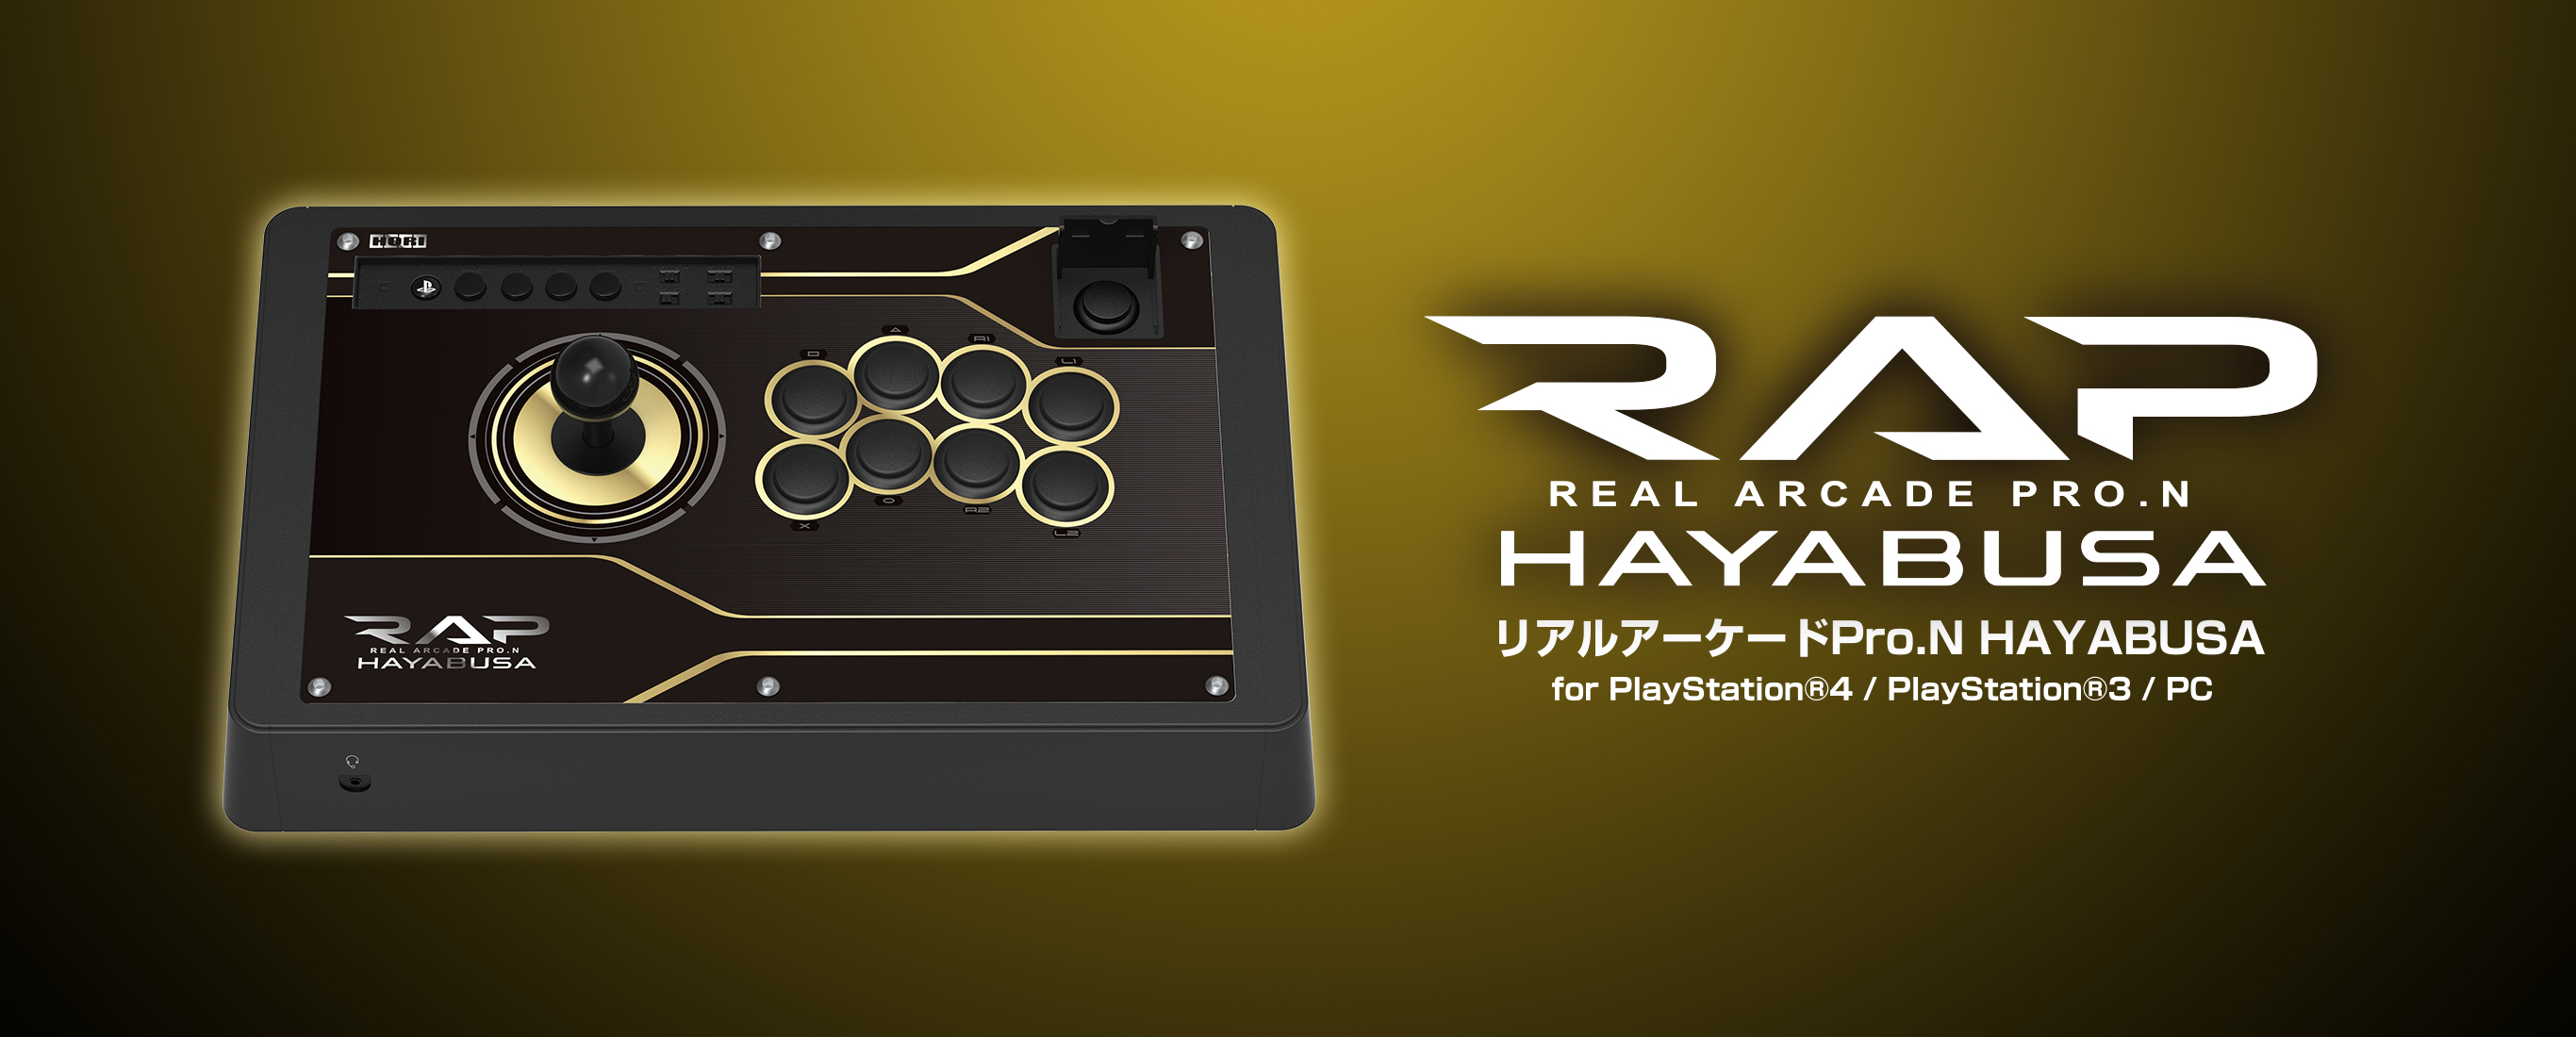 Hori P4/PC Real Arcade Pro N HAYABUSA 格鬥搖桿(PS4-092) - 2000Fun